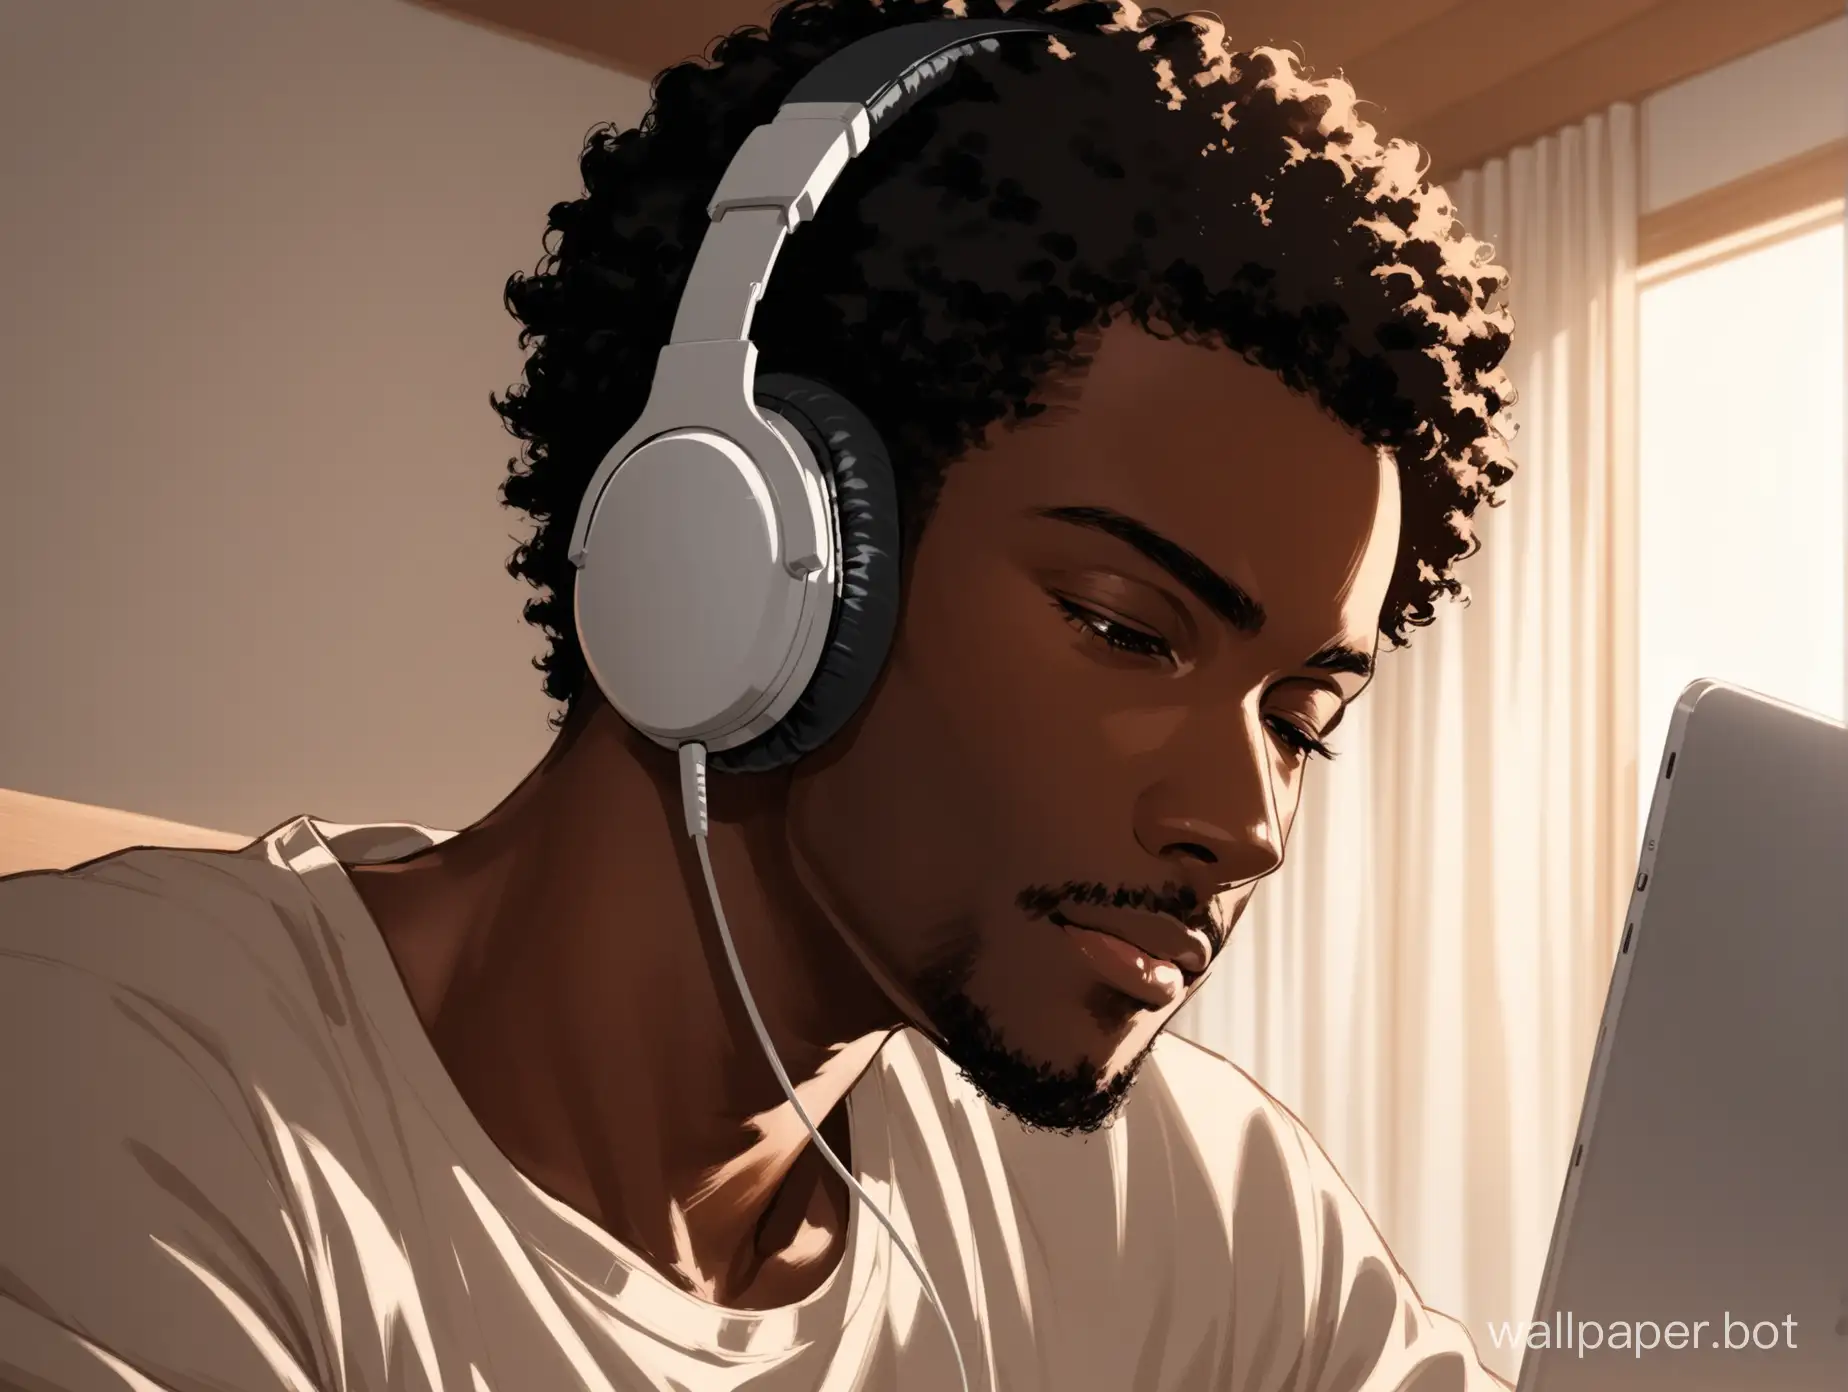 black man study in bedroom with earphone